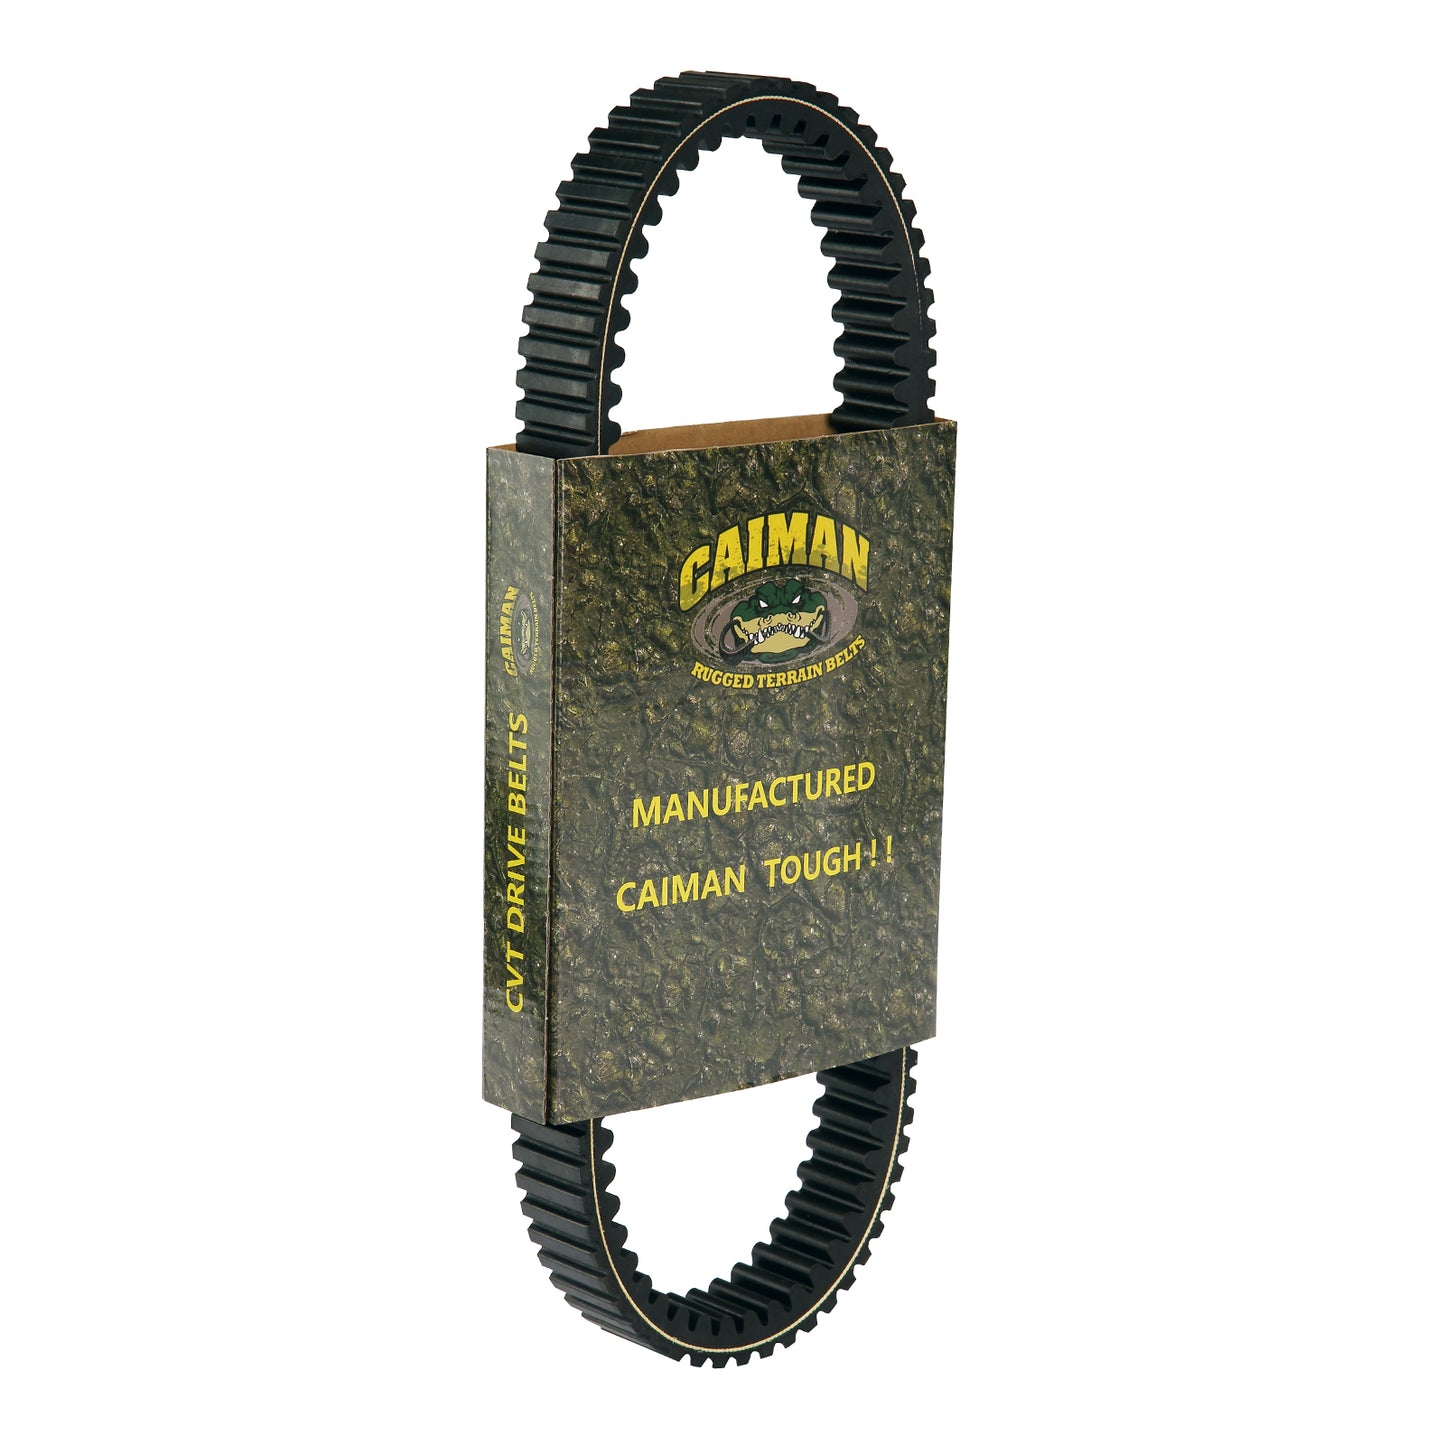 CAM-28VS4588 Can Am Belt Drive Belts for 2007-2016 John Deere Gator XUV 620i 4x4 Caiman Rugged Terrain Belt